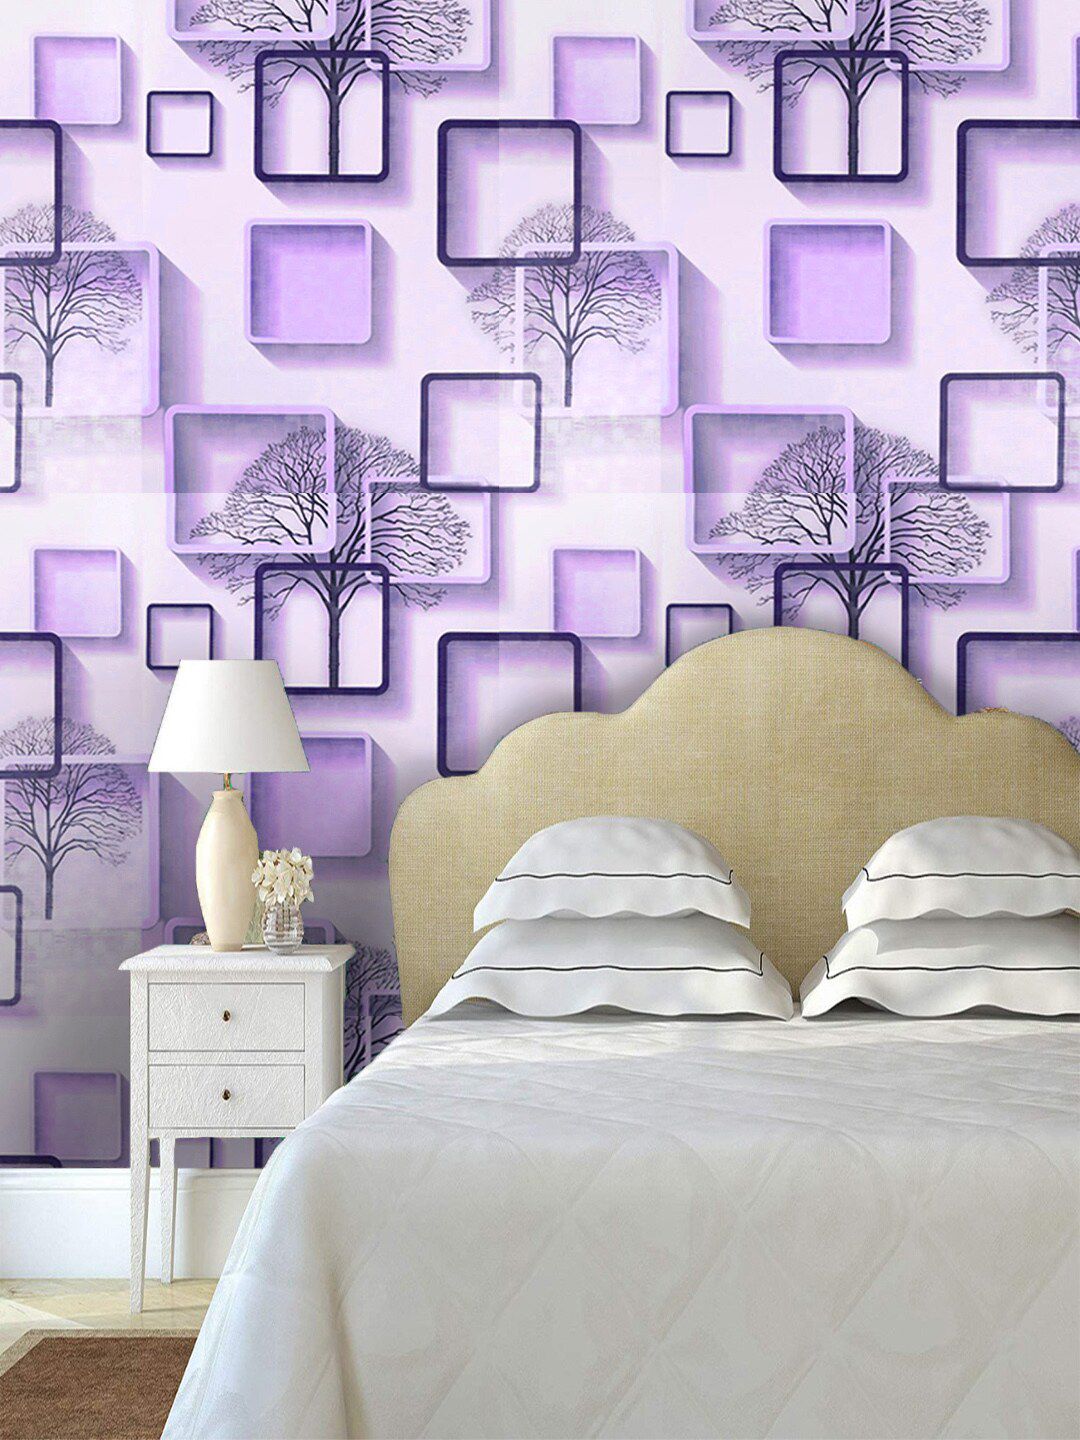 Jaamso Royals Lavender Printed Self-Adhesive & Waterproof Wallpaper Price in India